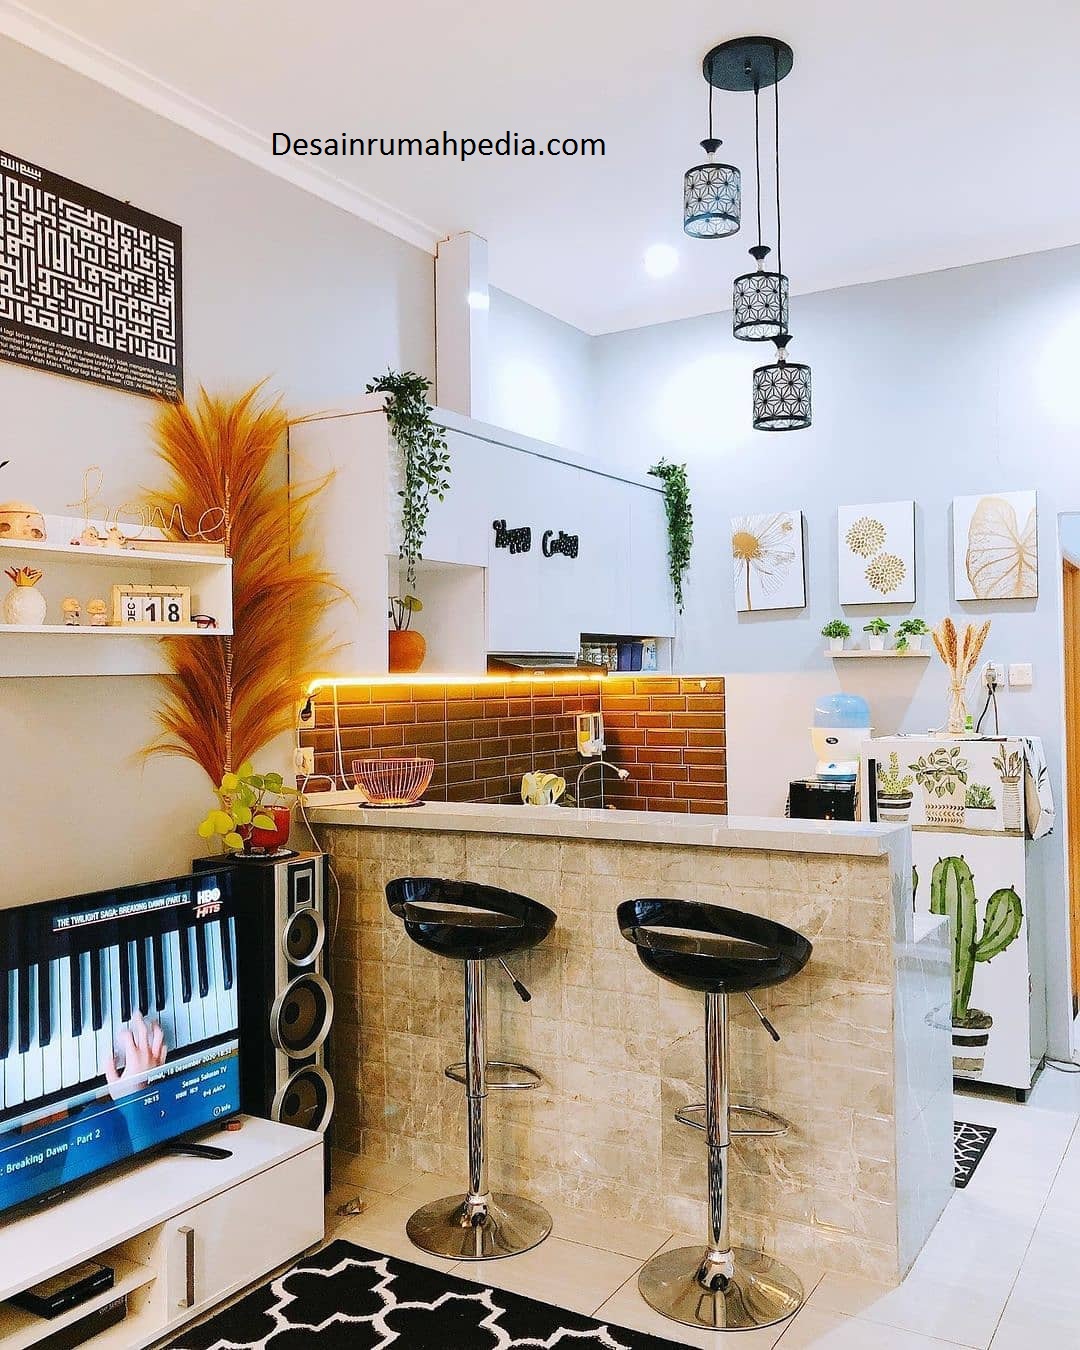 Boleh Dicontoh Inspirasi Desain Dapur Ala Cafe Desainrumahpediacom Inspirasi Desain Rumah Minimalis Modern